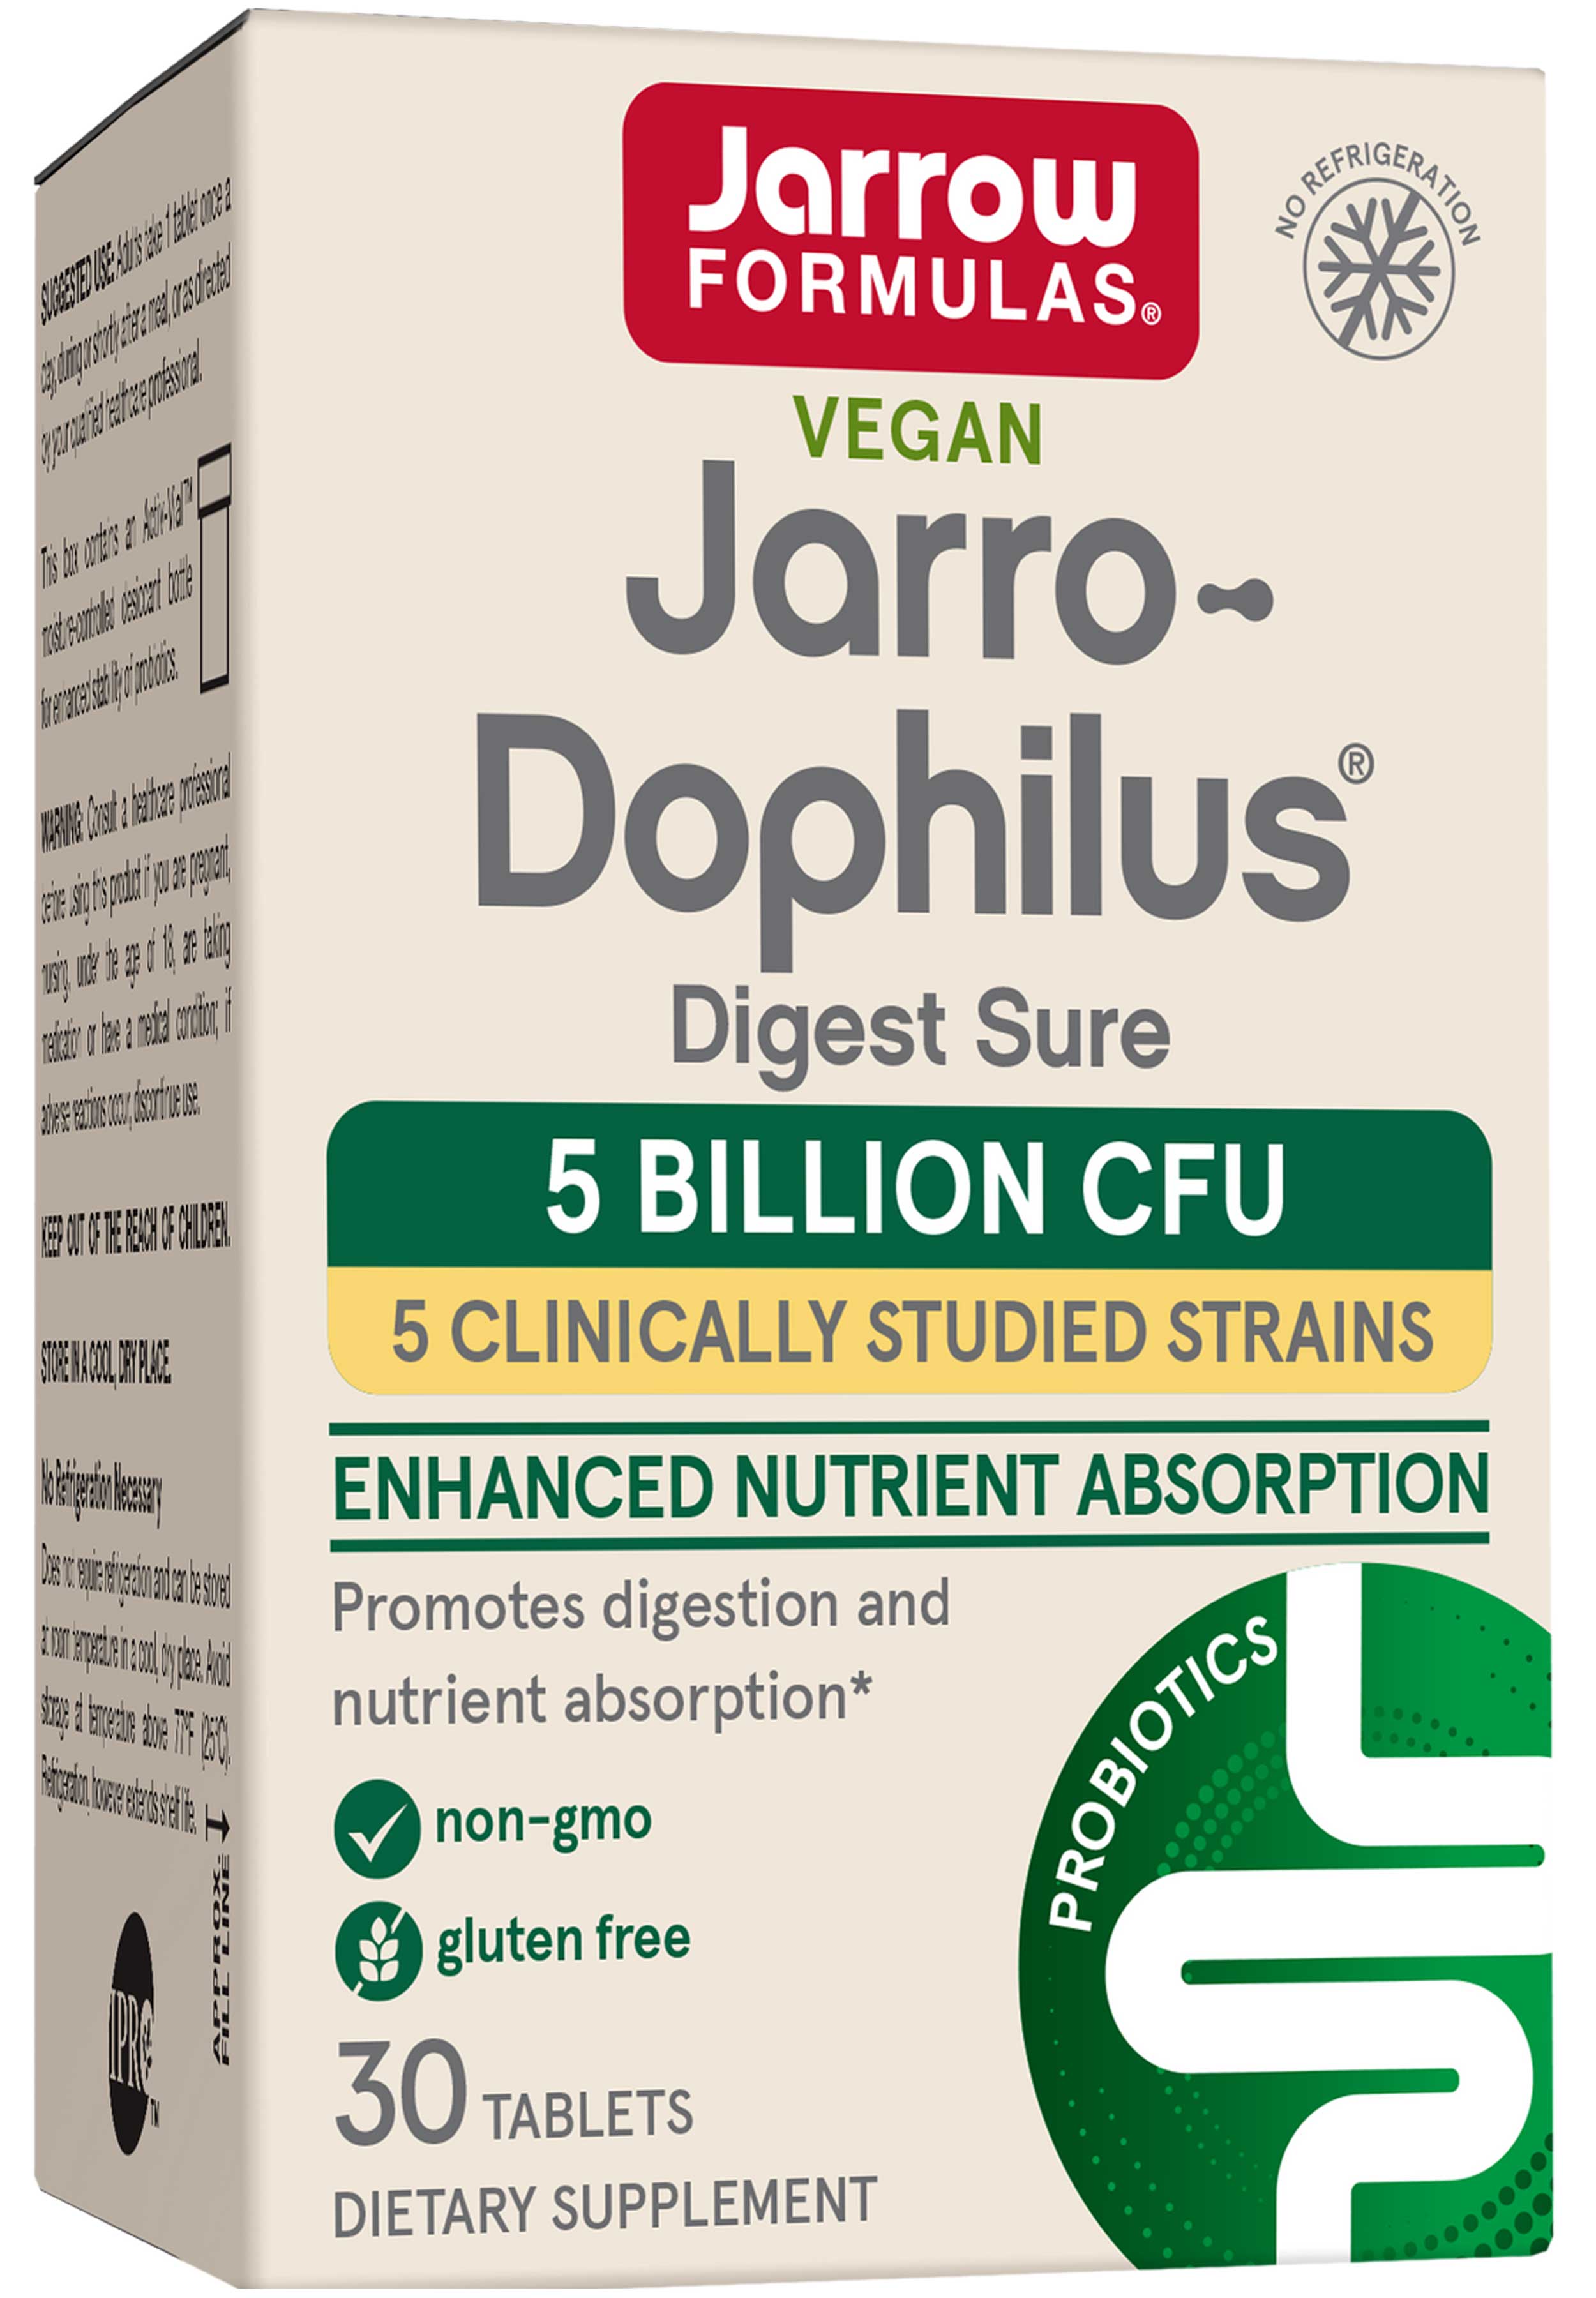 Jarrow Formulas Jarro-Dophilus Digest Sure 5 Billion